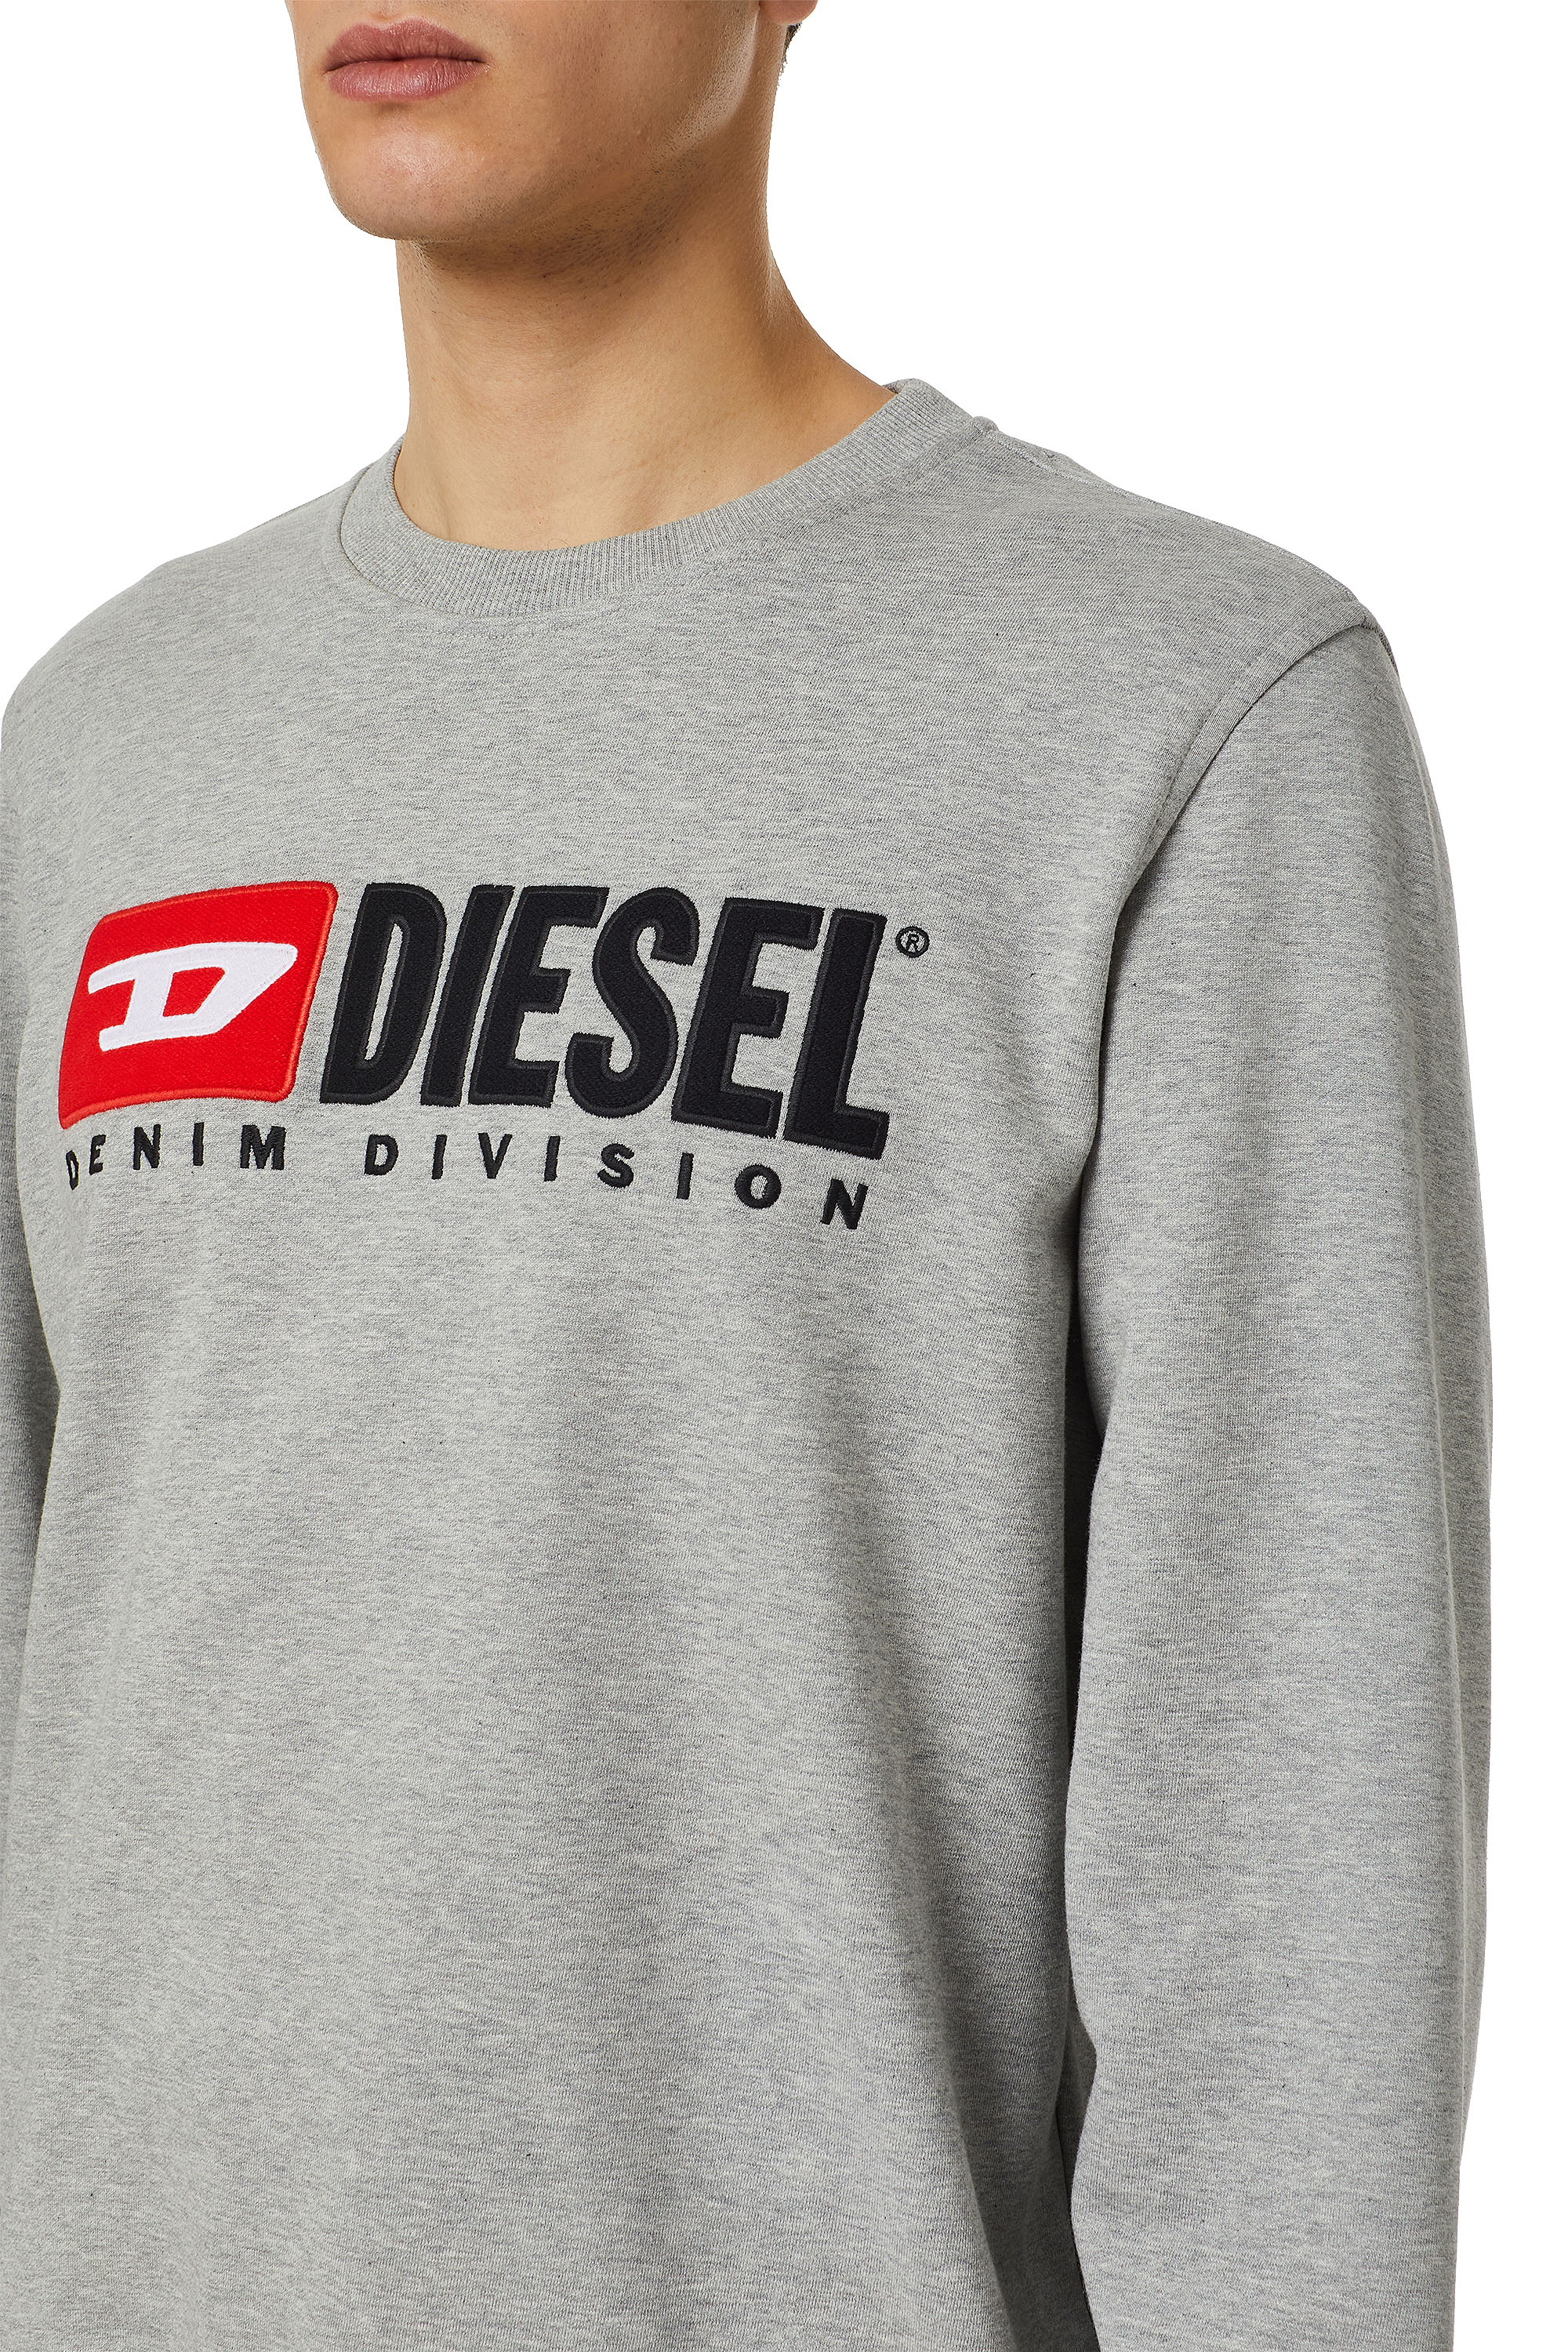 Diesel - S-GINN-DIV, グレー - Image 4